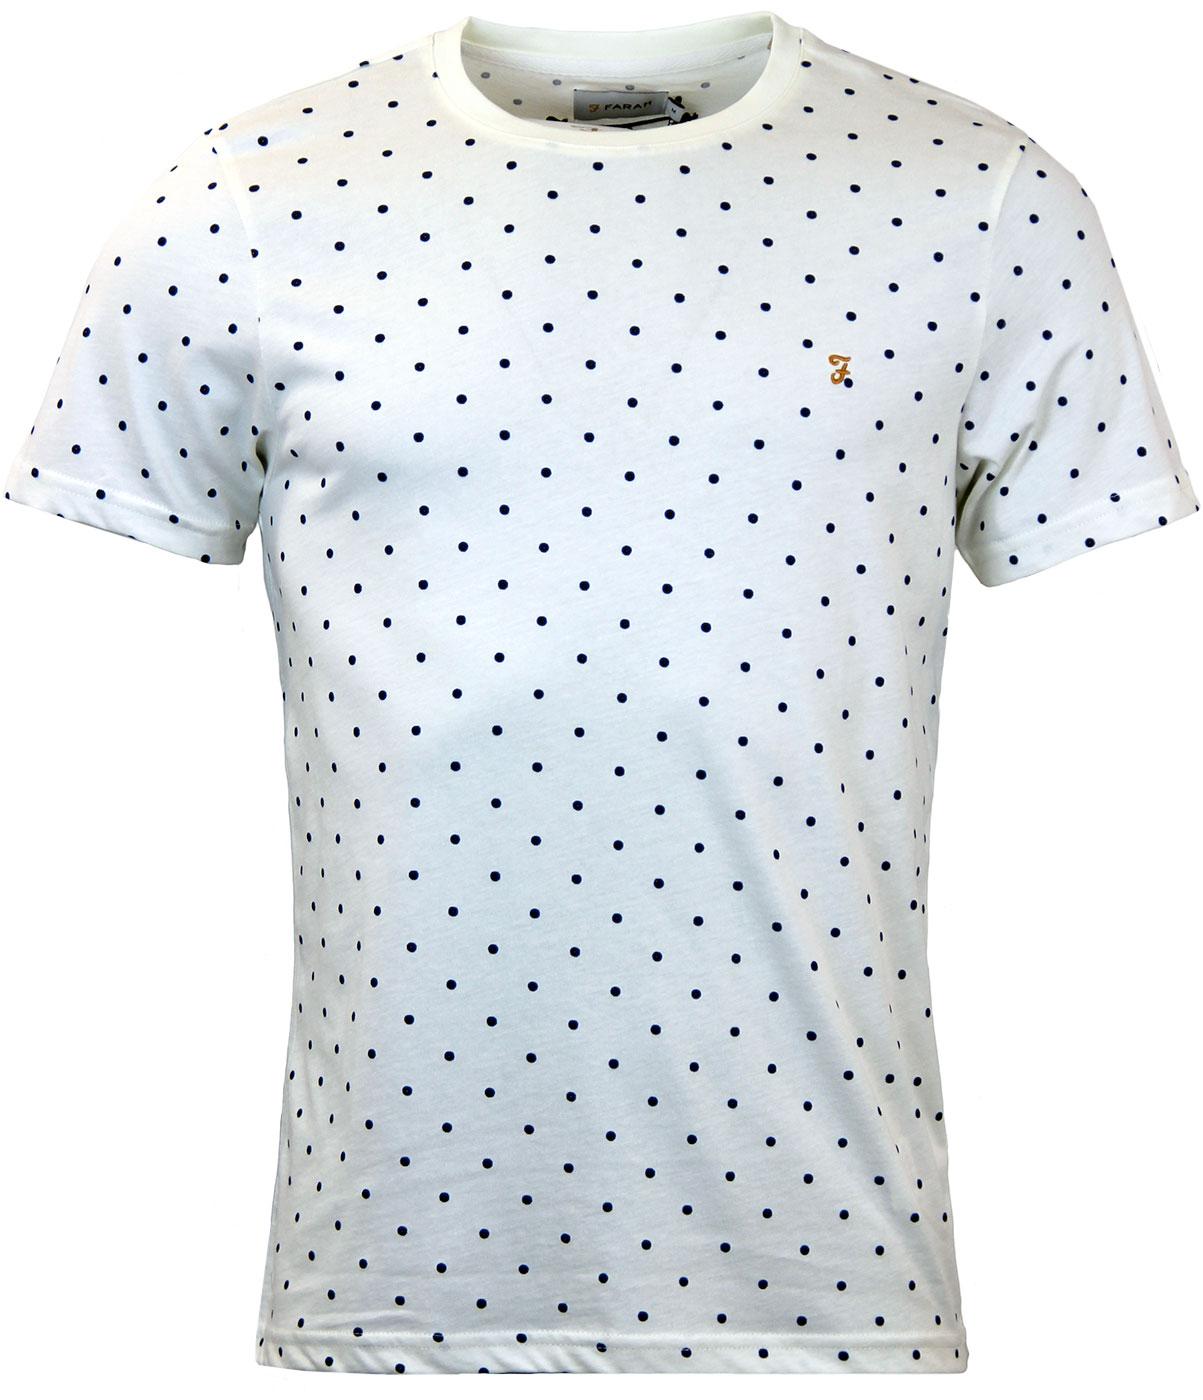 Bilton FARAH Retro Mod 60s Polka Dot Print T-Shirt